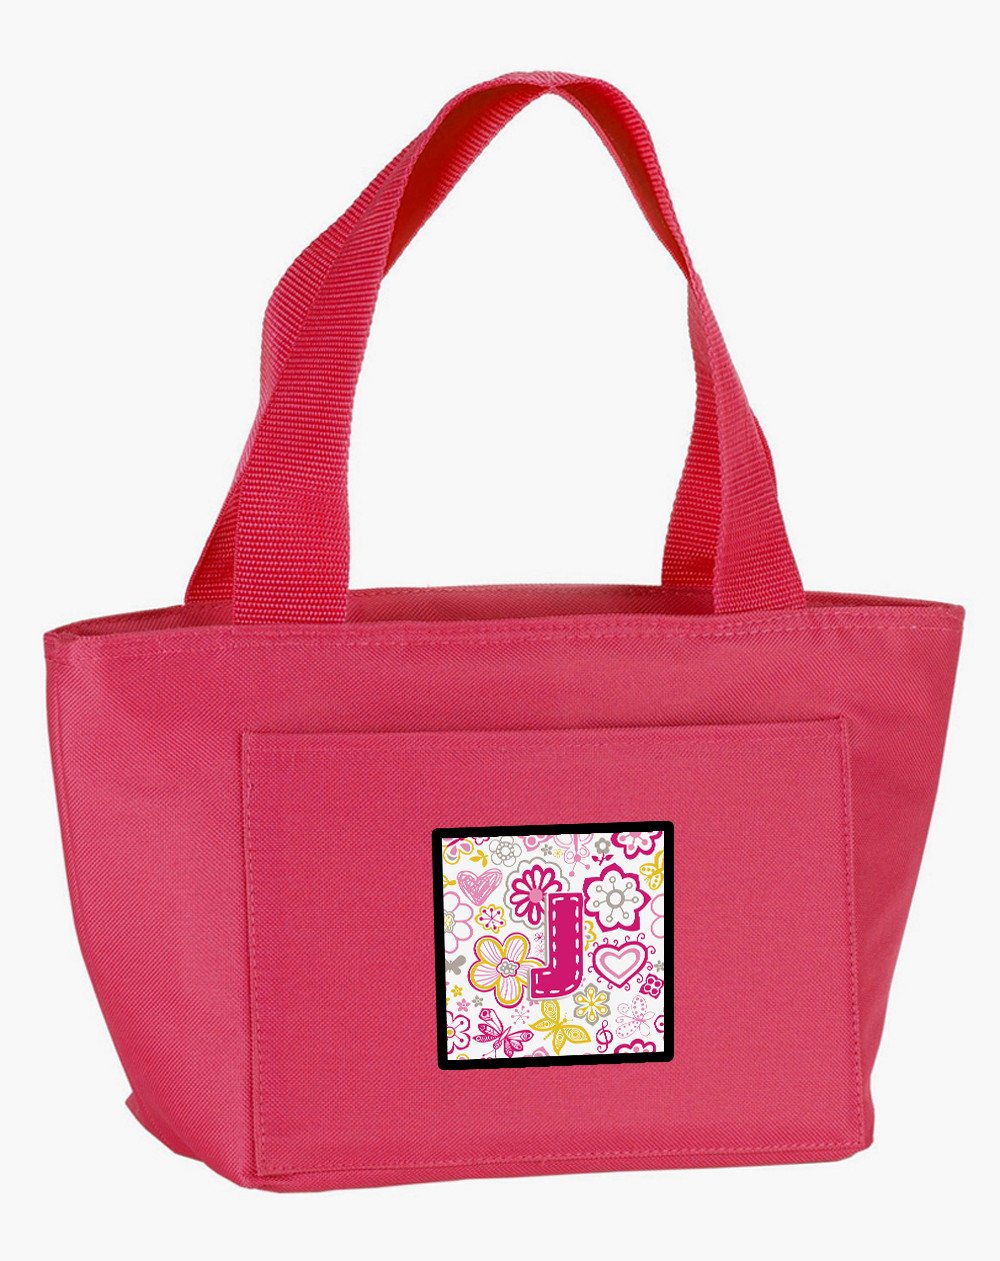 Letter J Flowers and Butterflies Pink Lunch Bag CJ2005-JPK-8808 by Caroline's Treasures